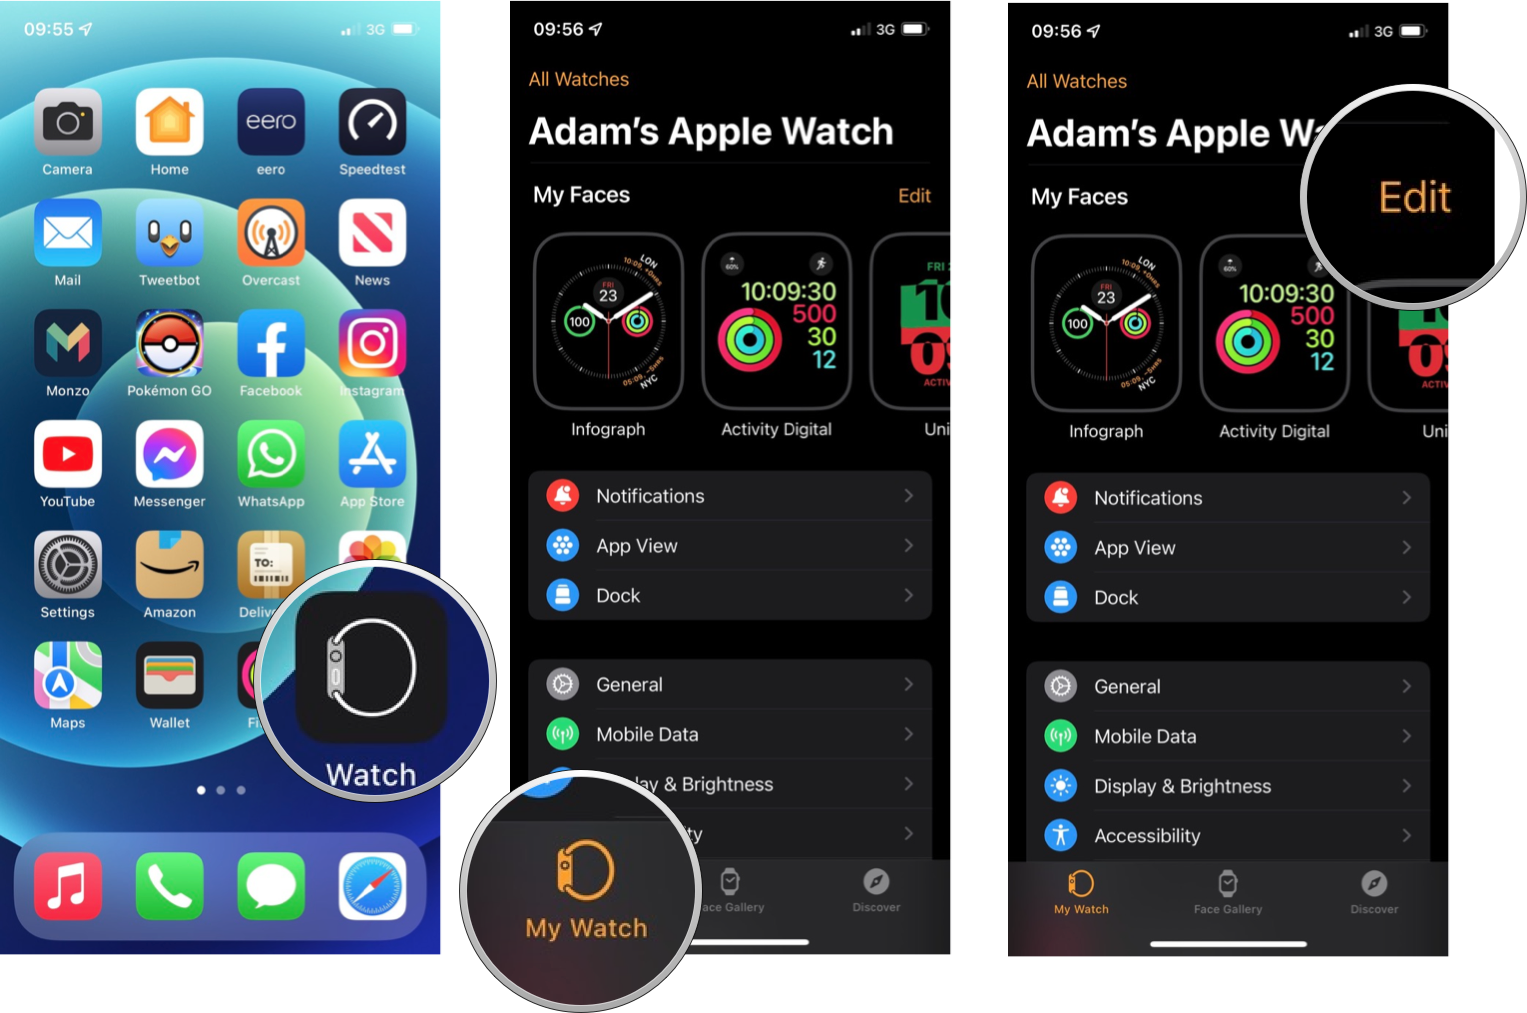 Organize Apple Watch faces via iPhone: Open Apple Watch app, tap on My Watch, tap on Edit